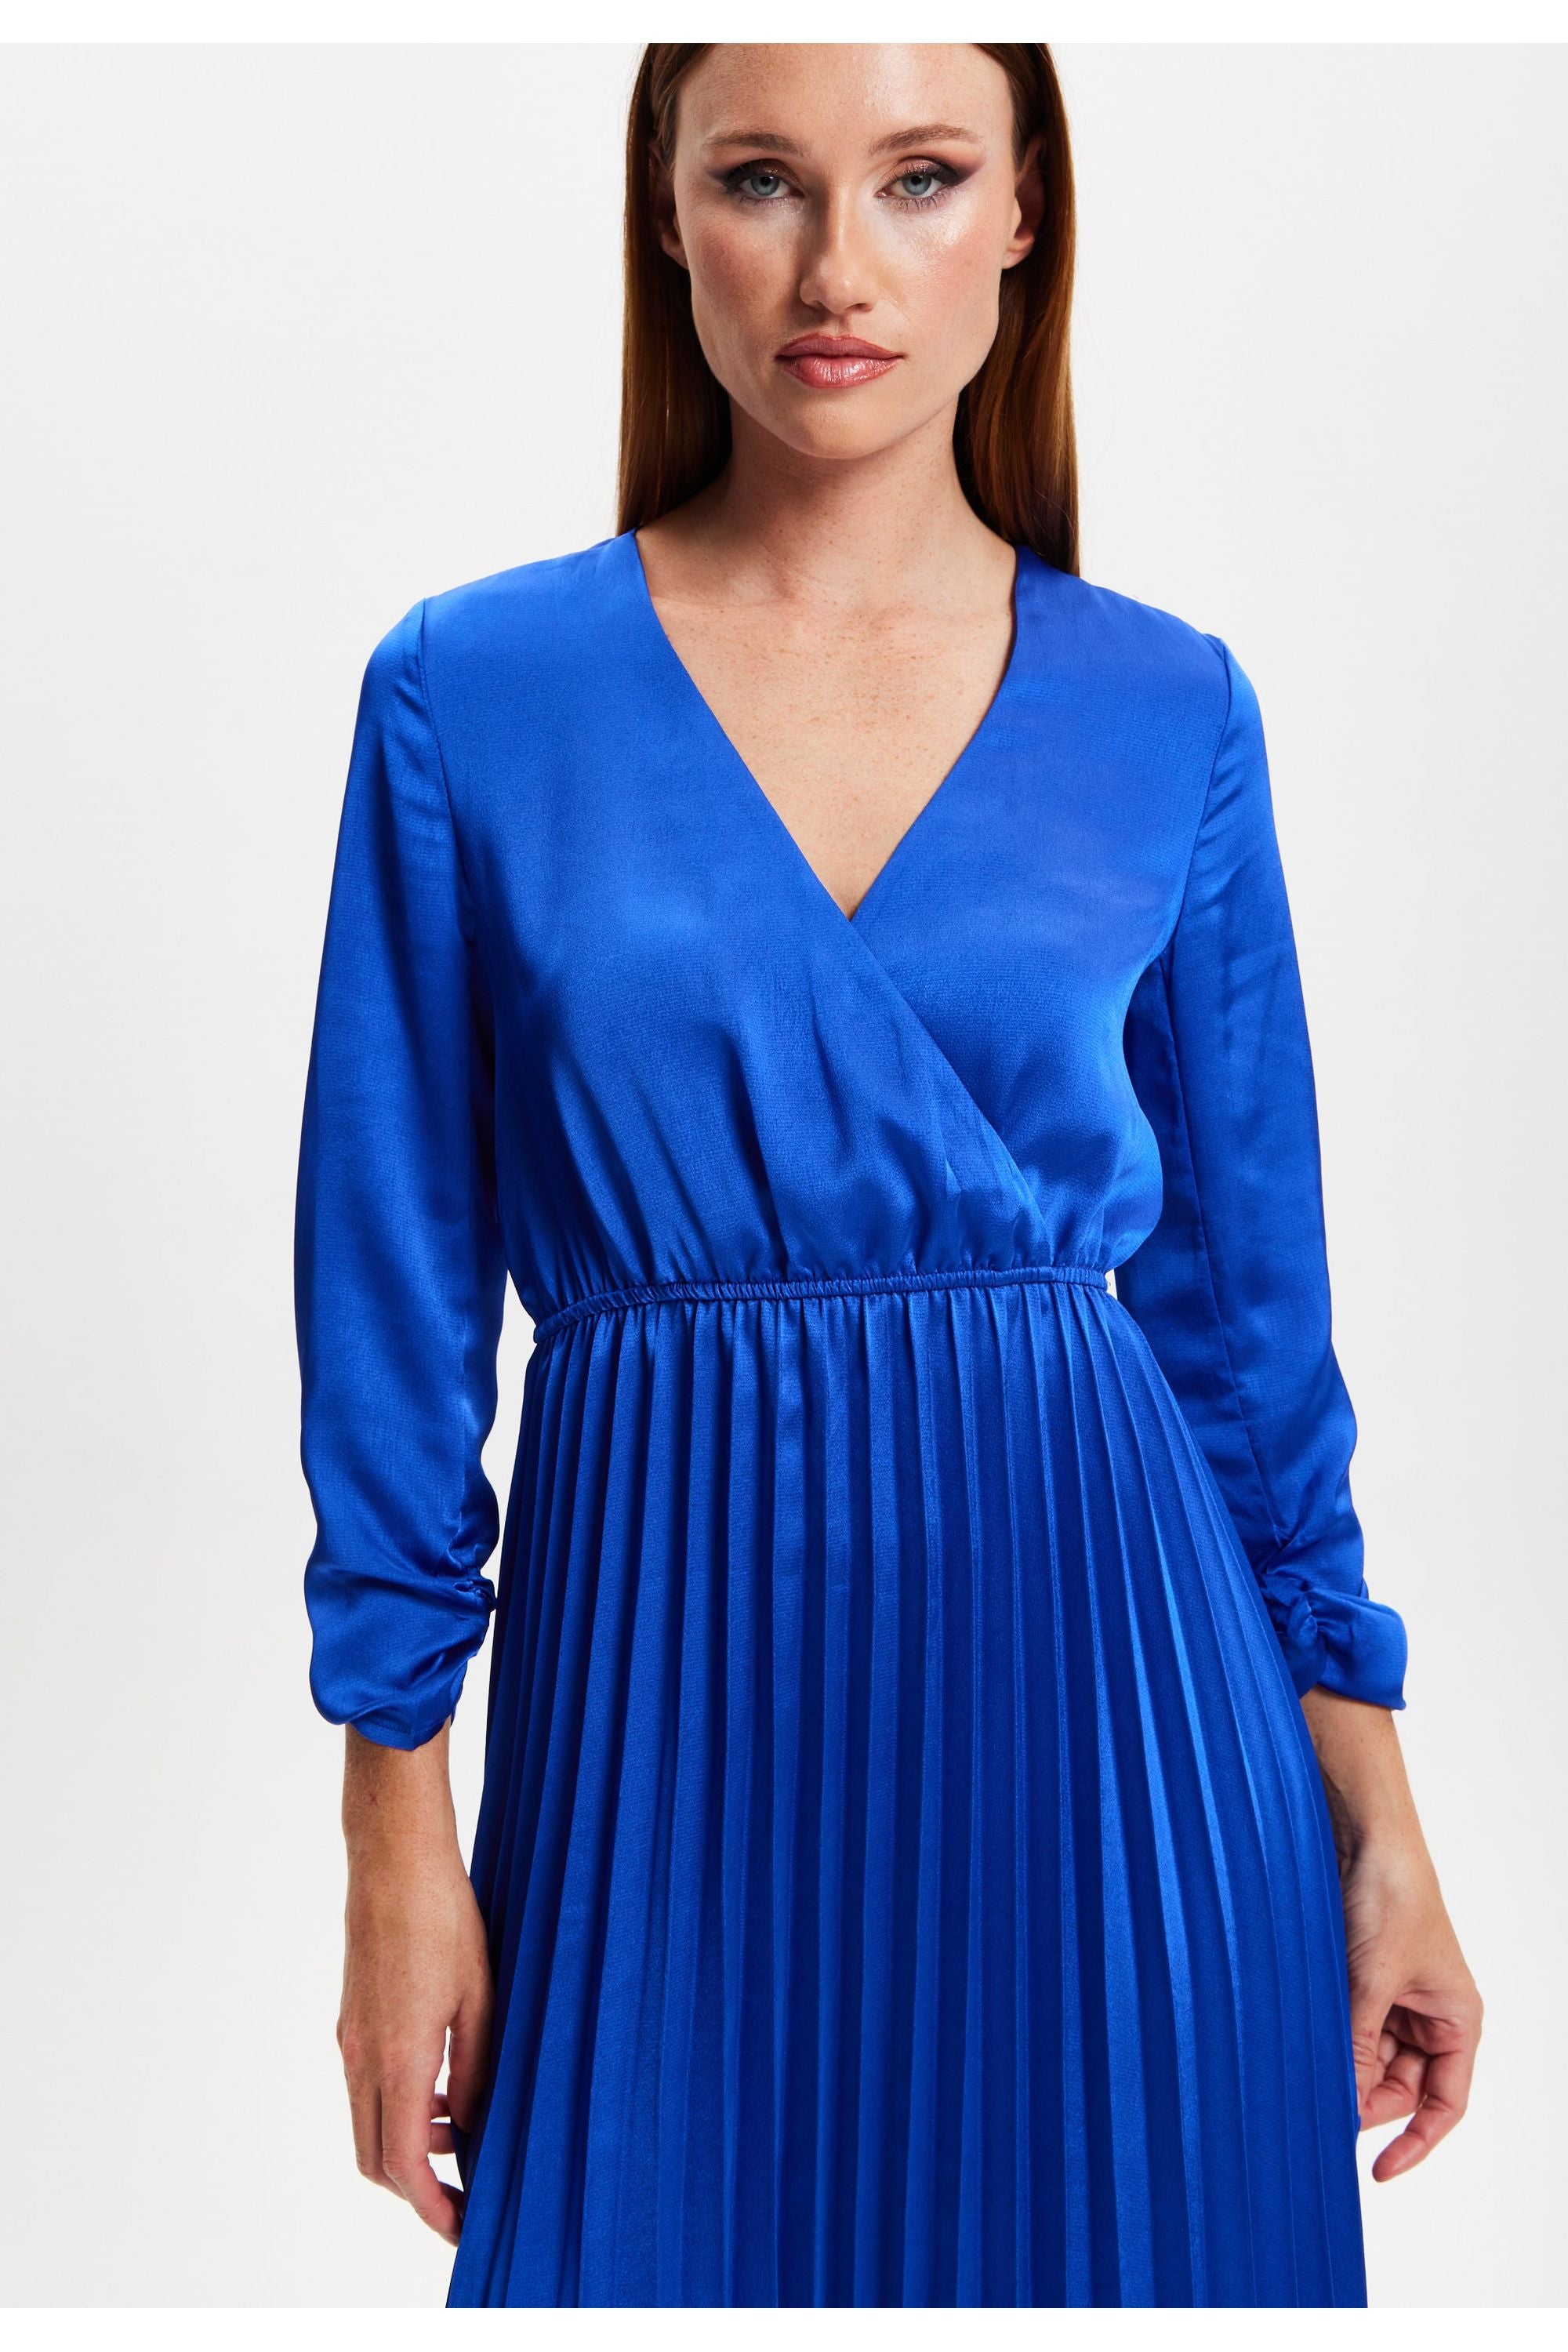 Royal Blue Midi Dress With Pleat Details EH1908Blue